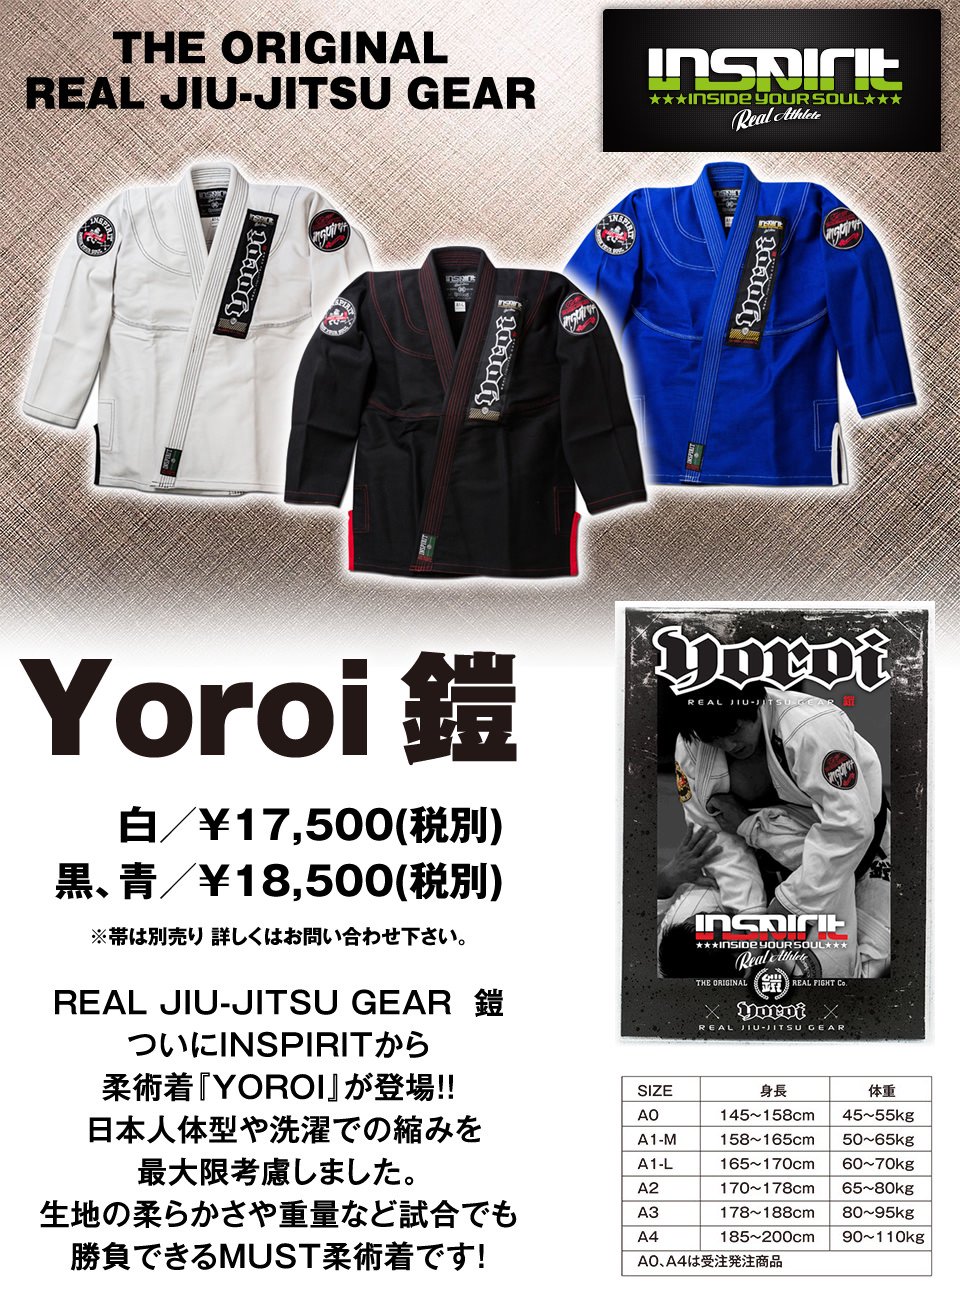 INSPIRIT Yoroi 鎧 - フィットネスショップ通販サイト 格闘技フィットネス